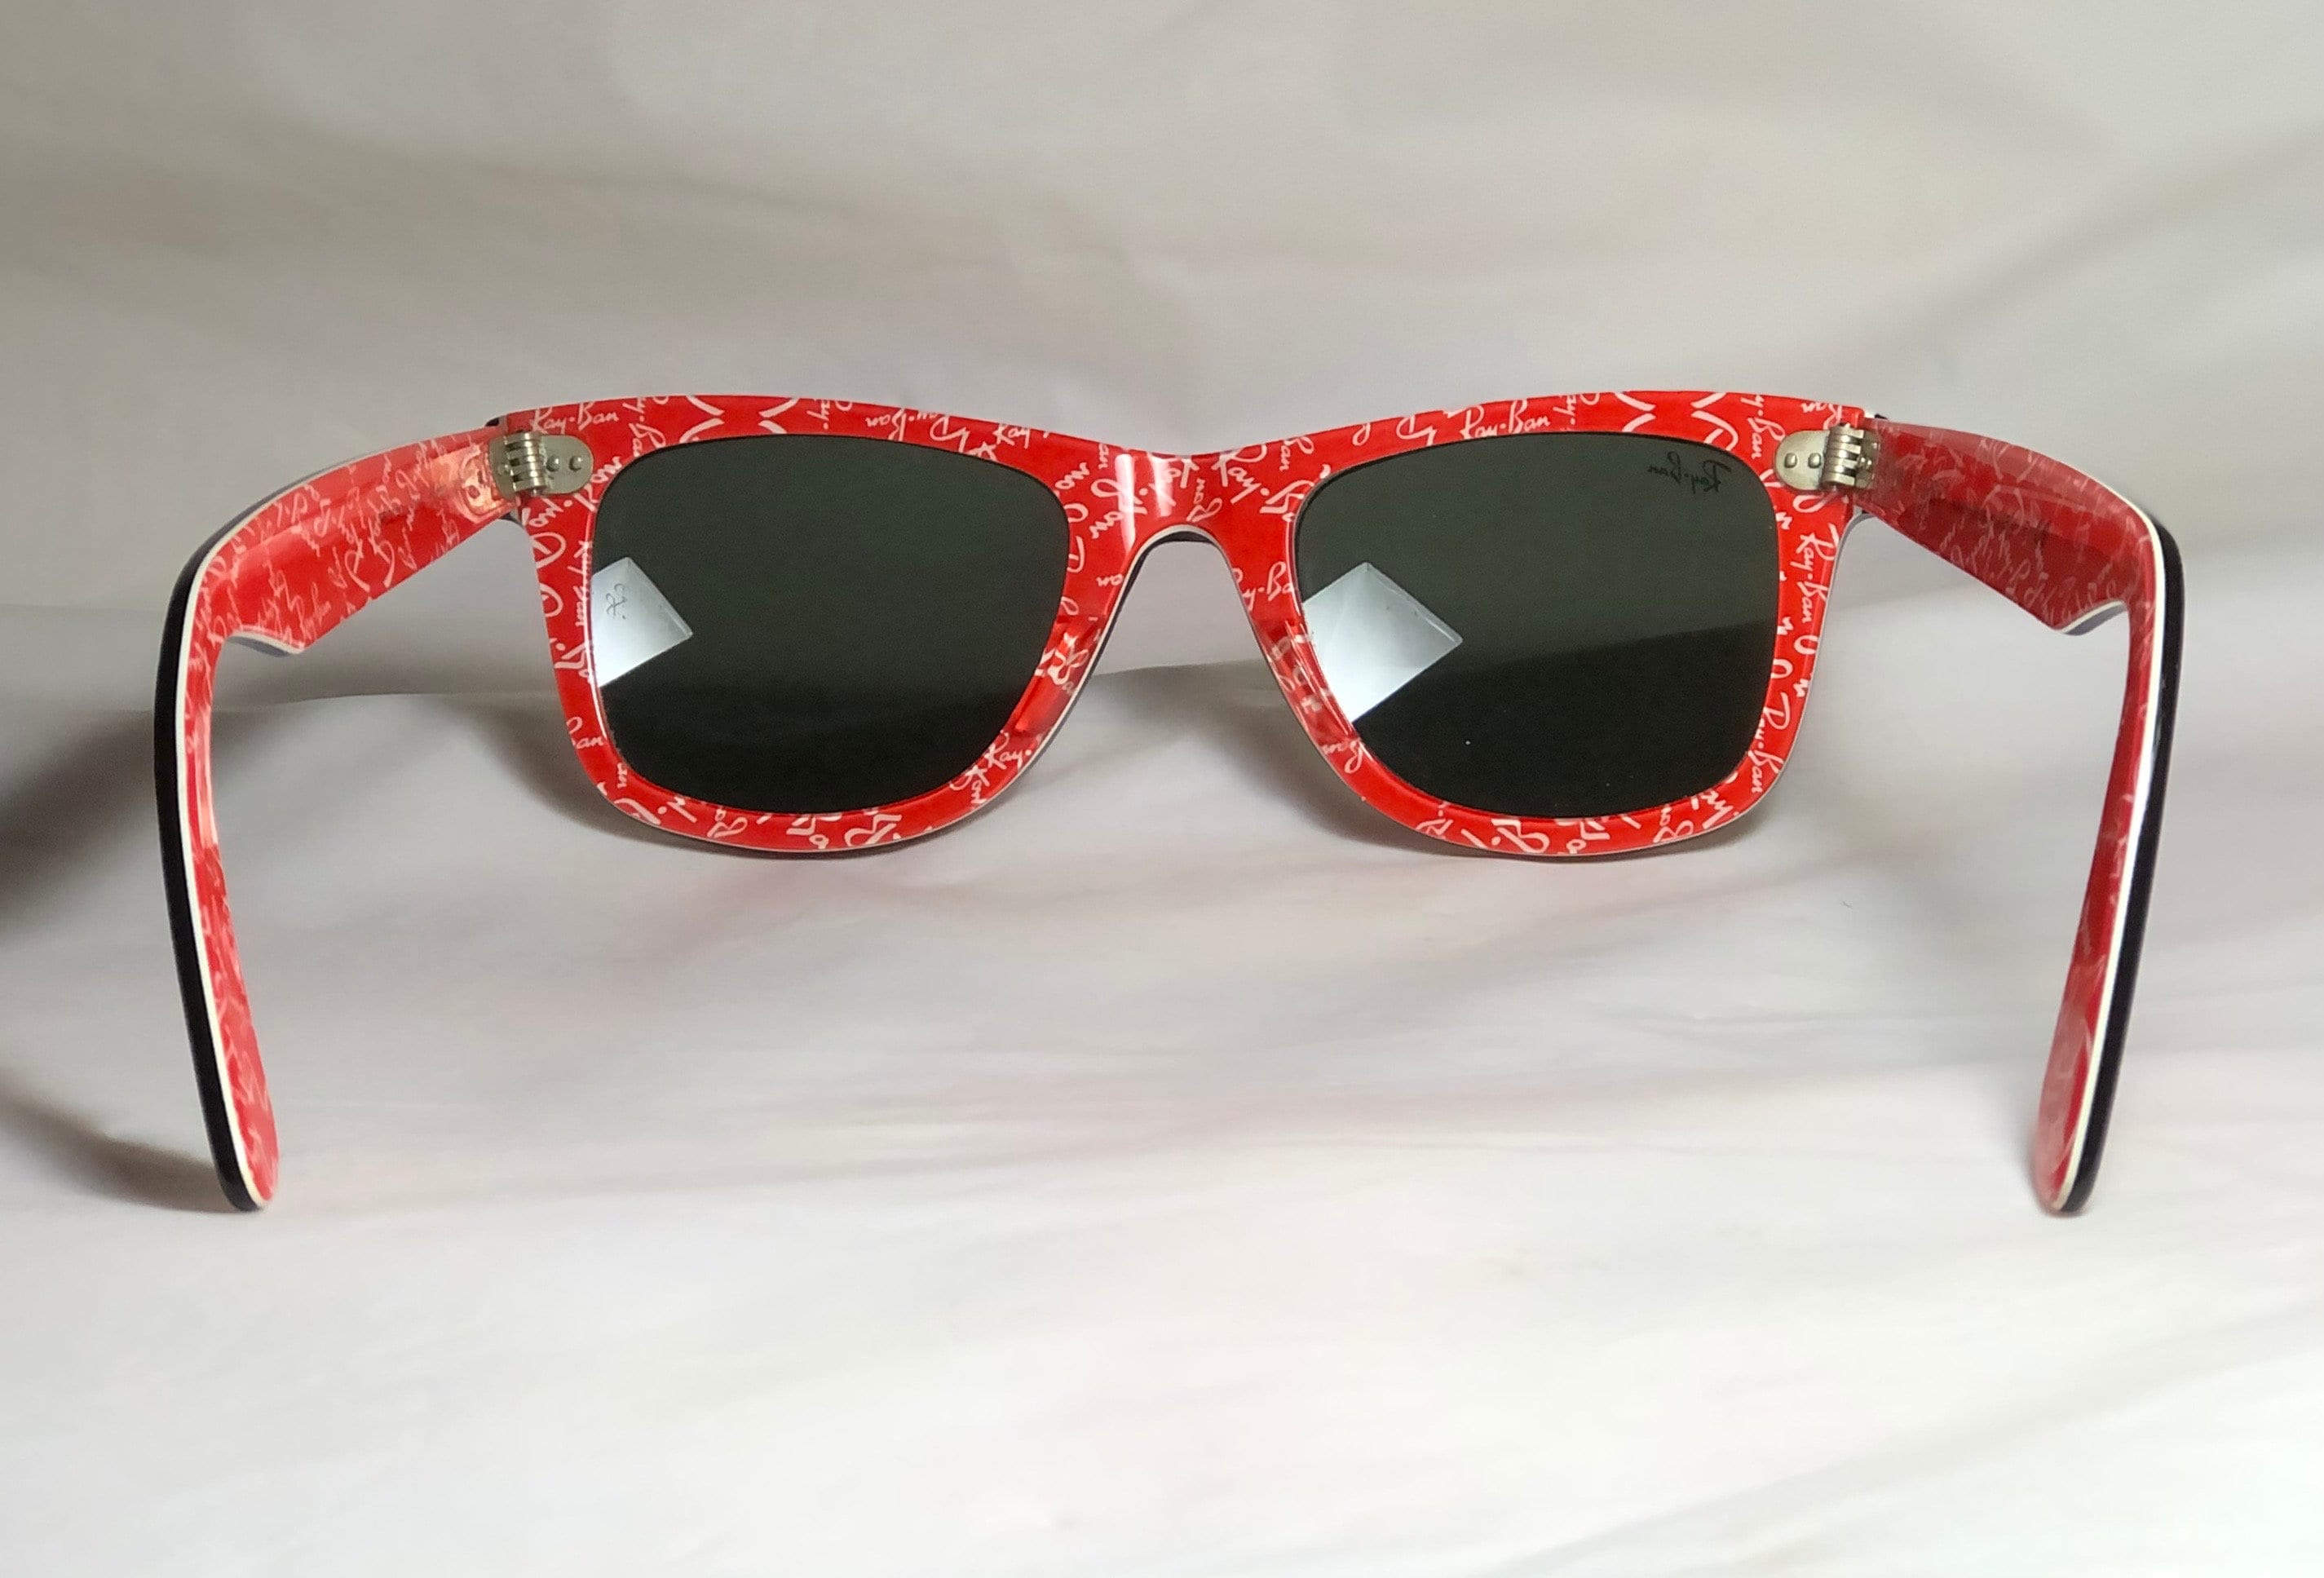 Chanel wayfarer sunglasses 